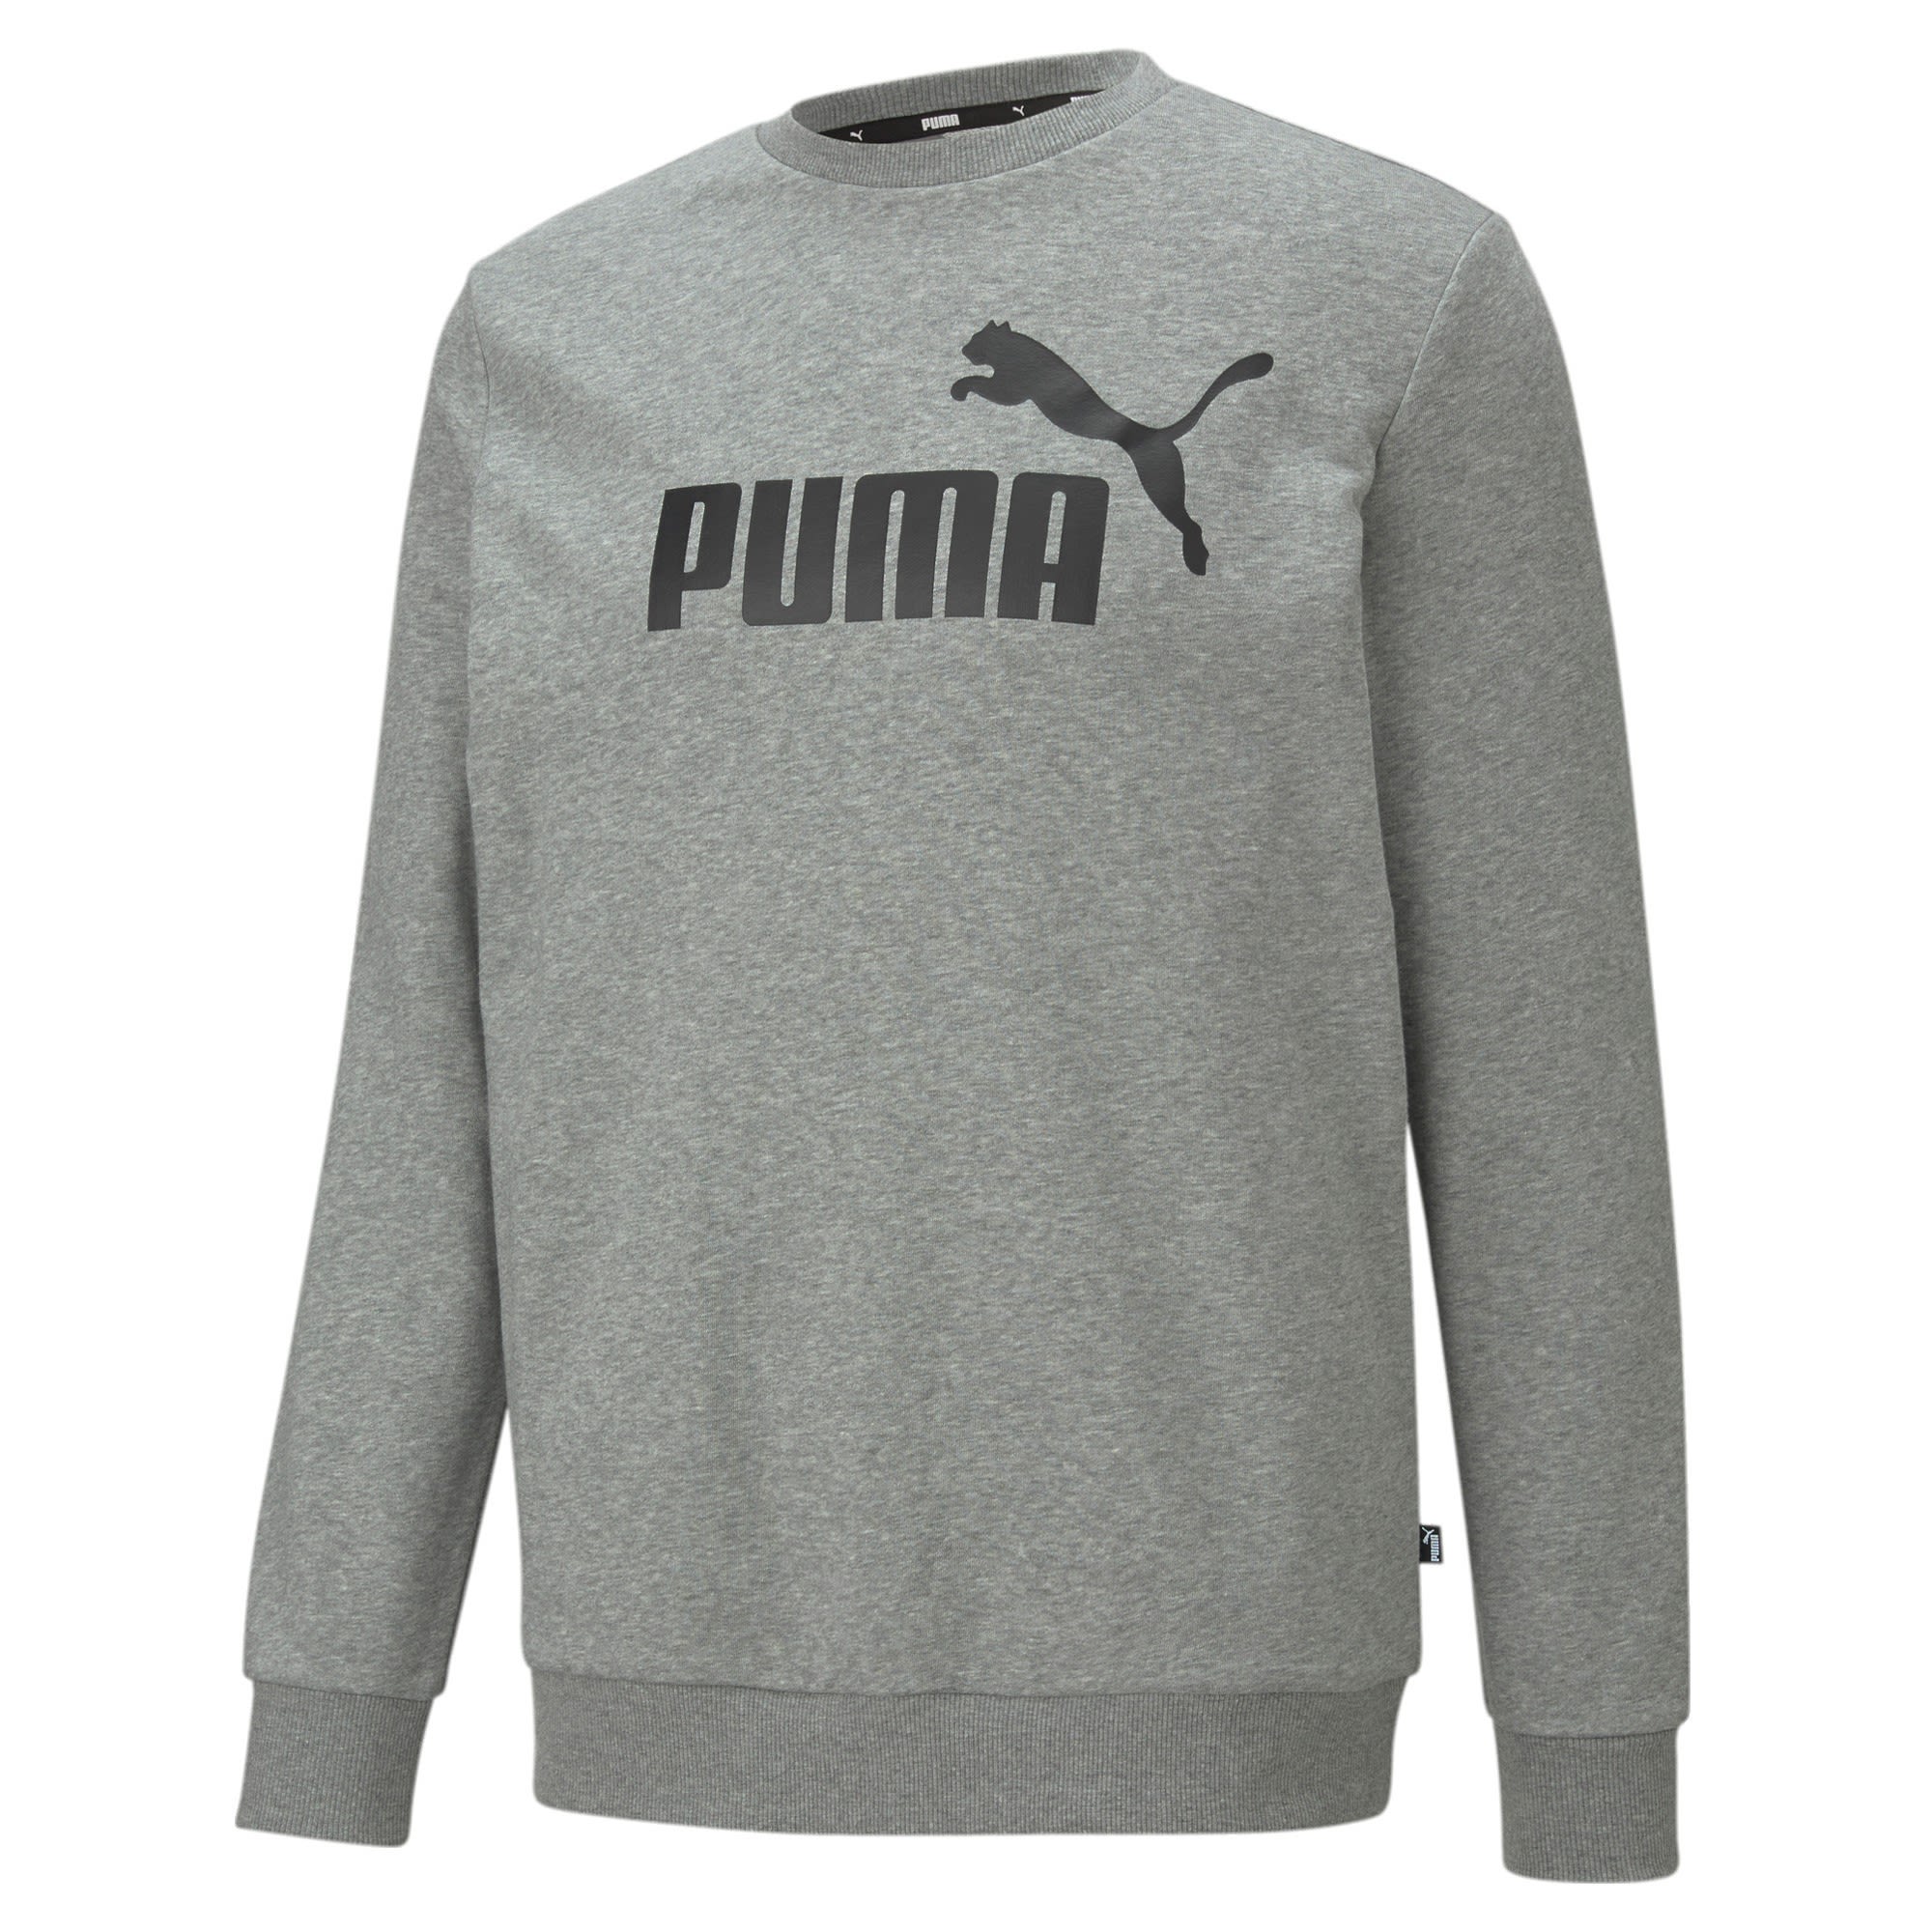 Puma Essentials Big Logo Crew Grau- Male Sweaters und Hoodies- Grsse S - Farbe Medium Gray Heather unter Puma